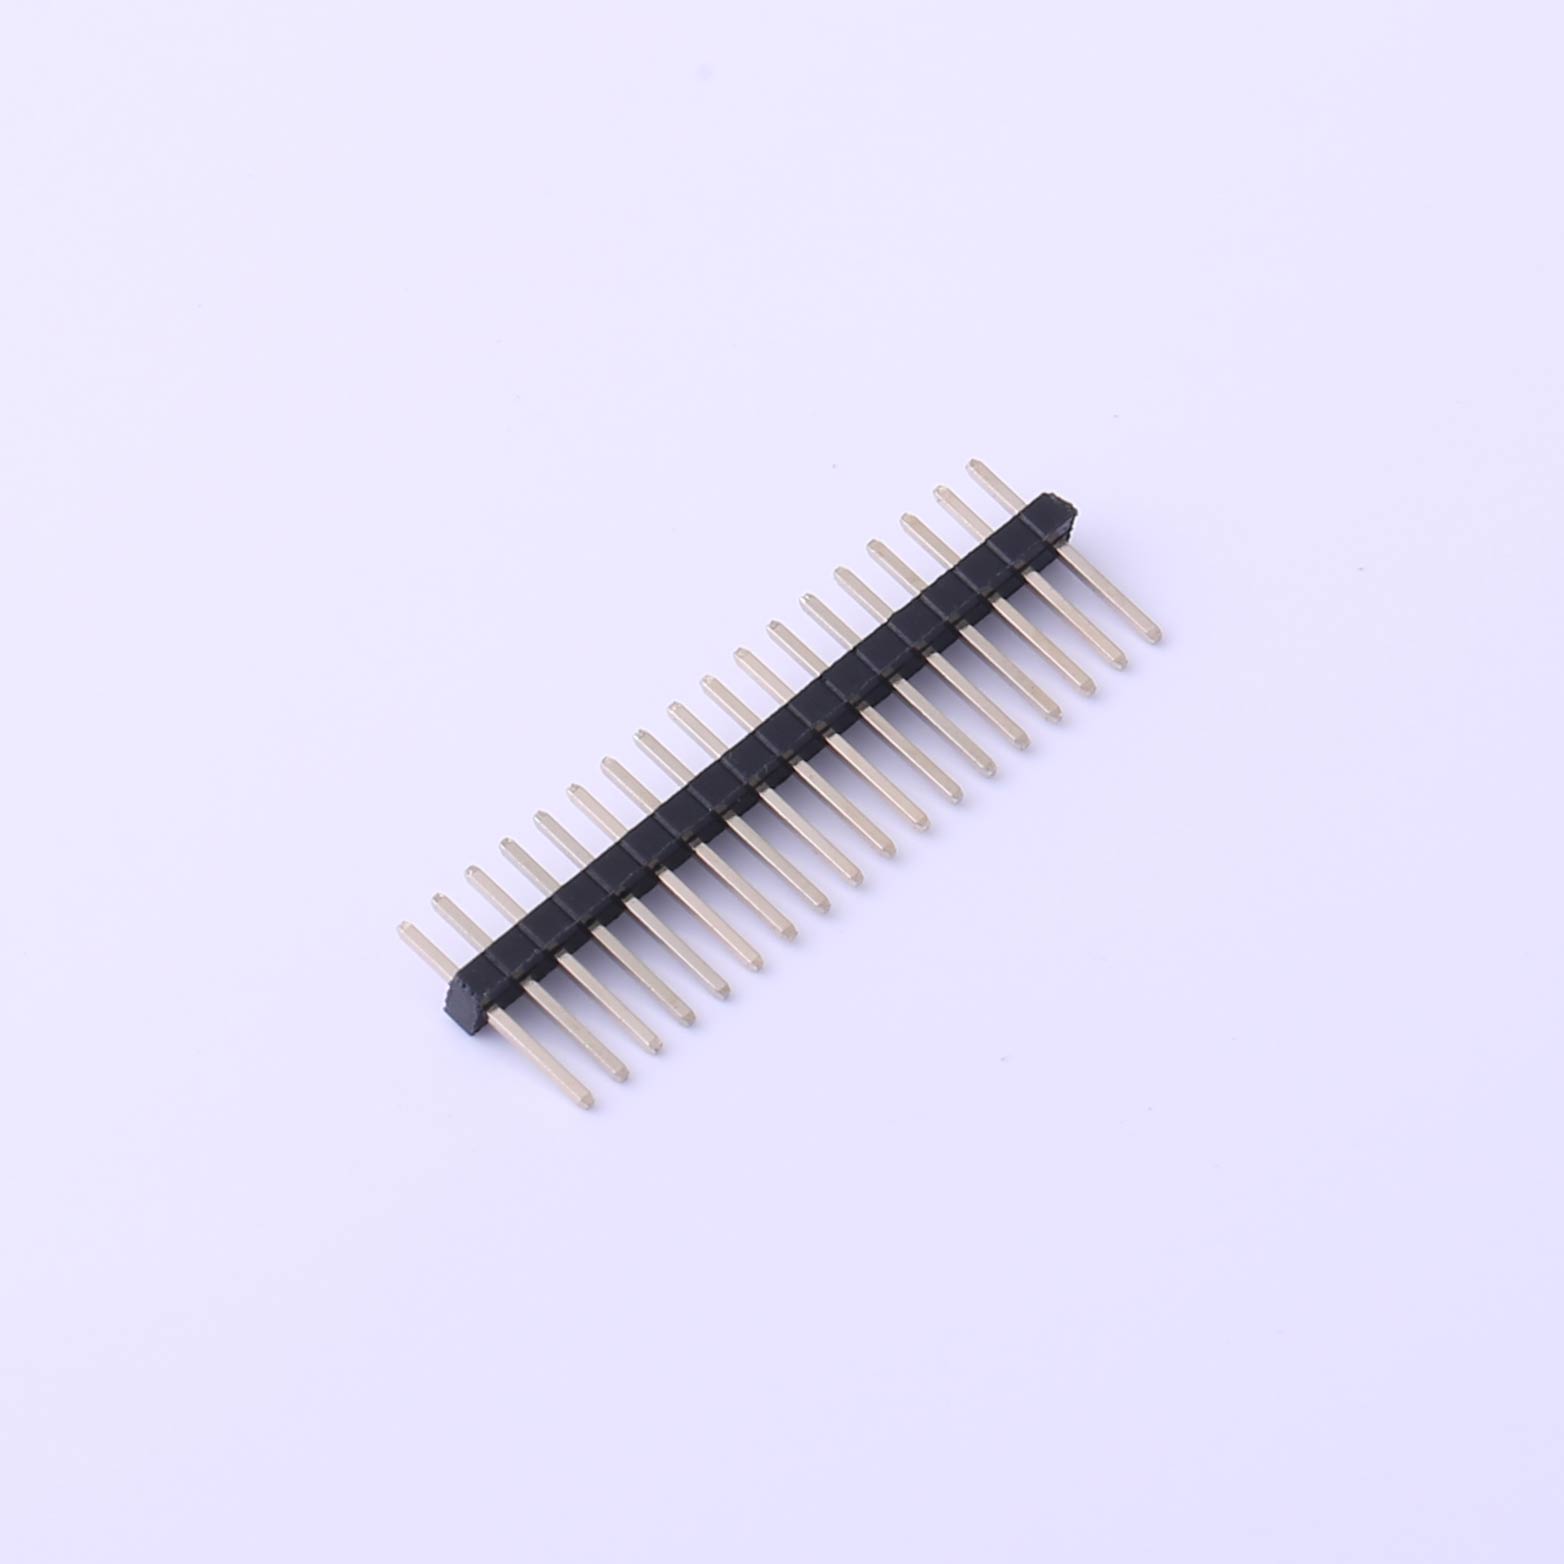 Kinghelm 1.27mm Pin Header Connector 18 Pin 1A - KH-1.27PH180-1X18P-L7.2